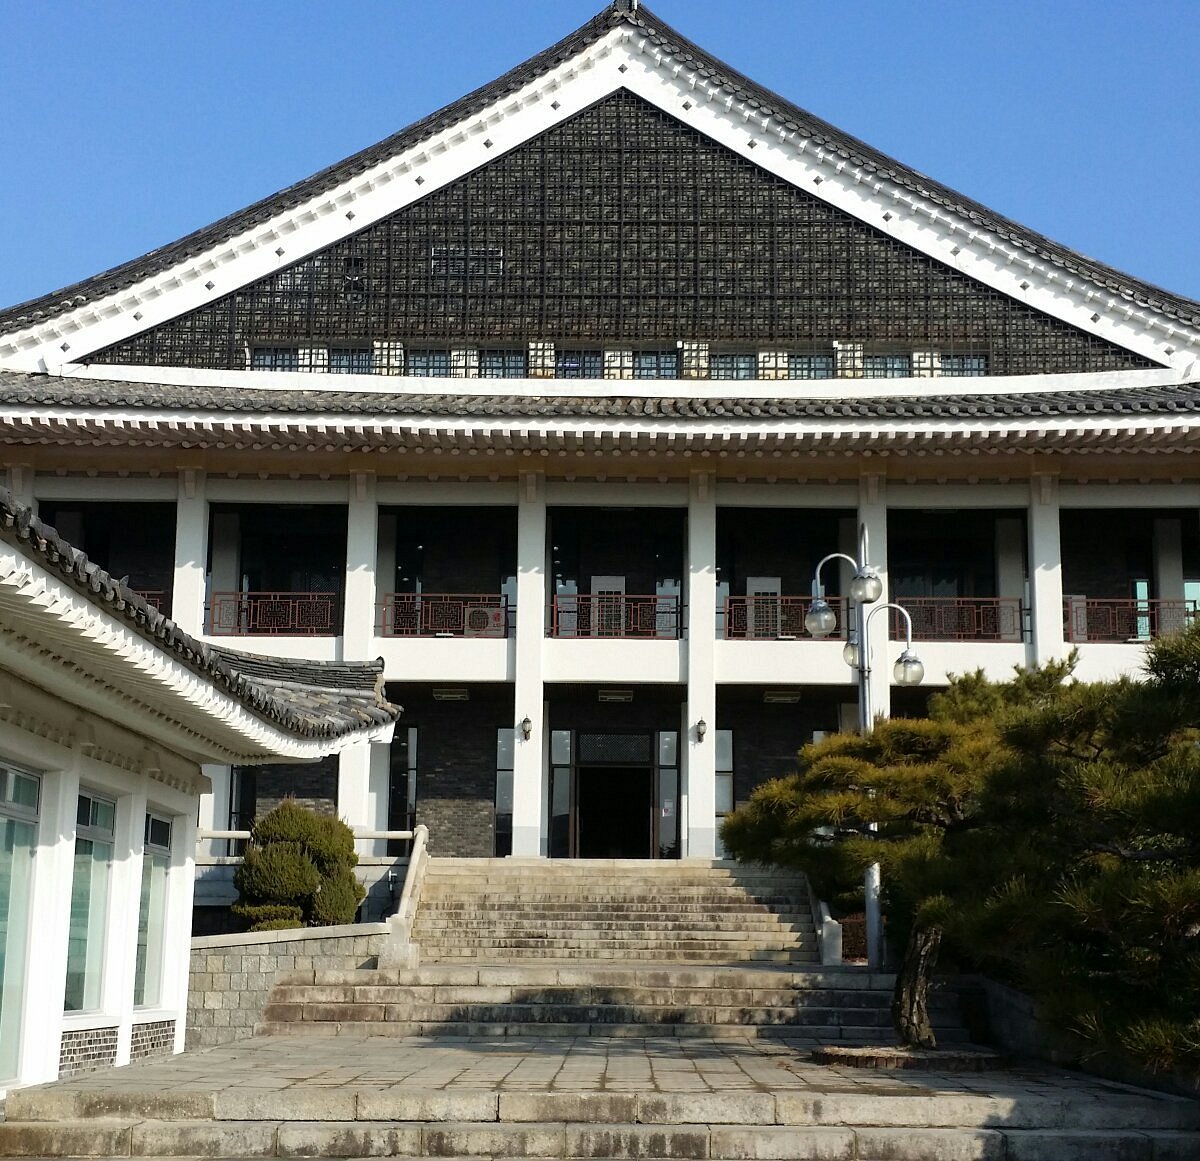 gyeongju tourism office